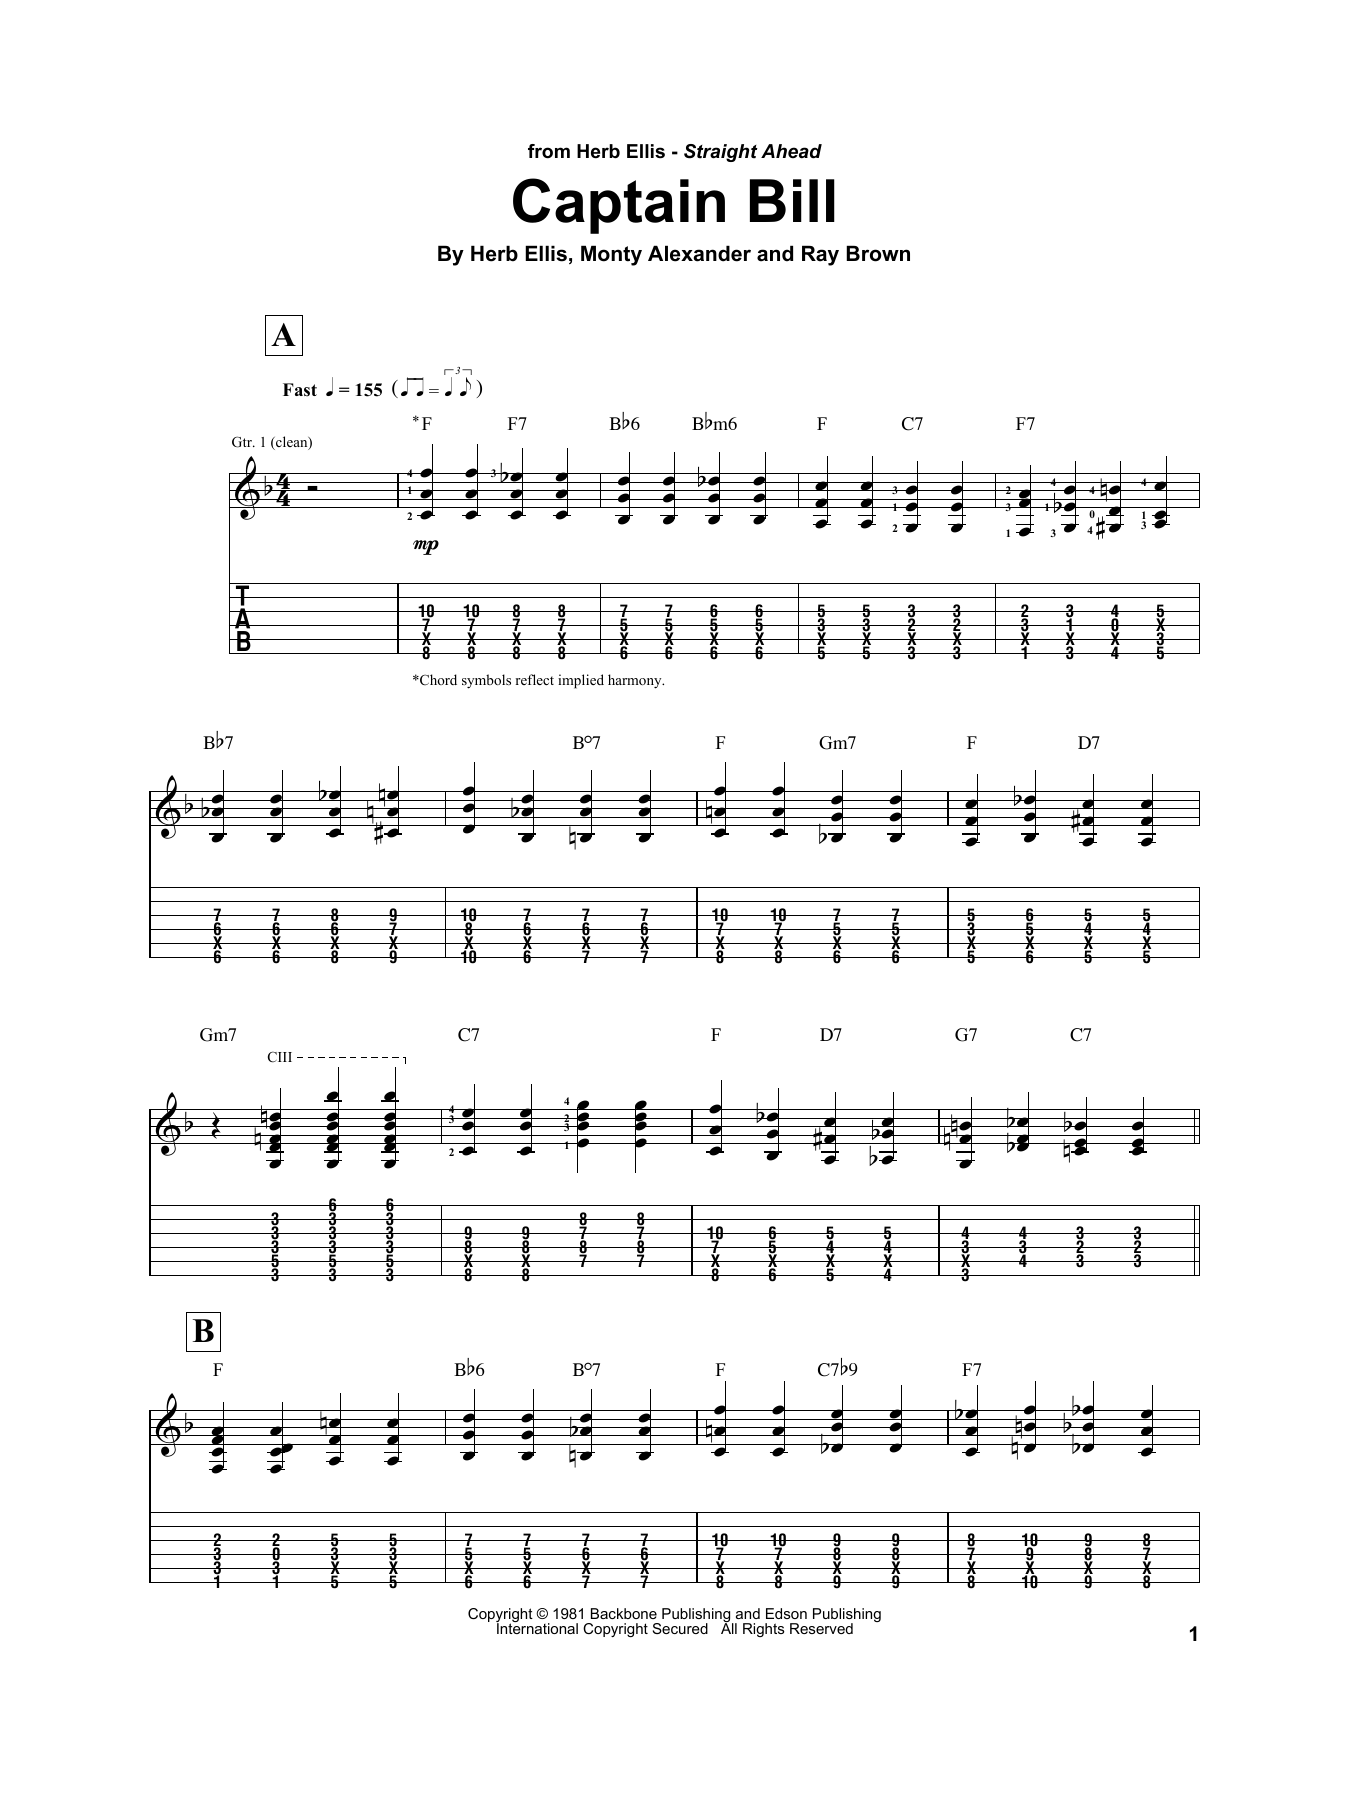 Herb Ellis Captain Bill Sheet Music Notes & Chords for Electric Guitar Transcription - Download or Print PDF